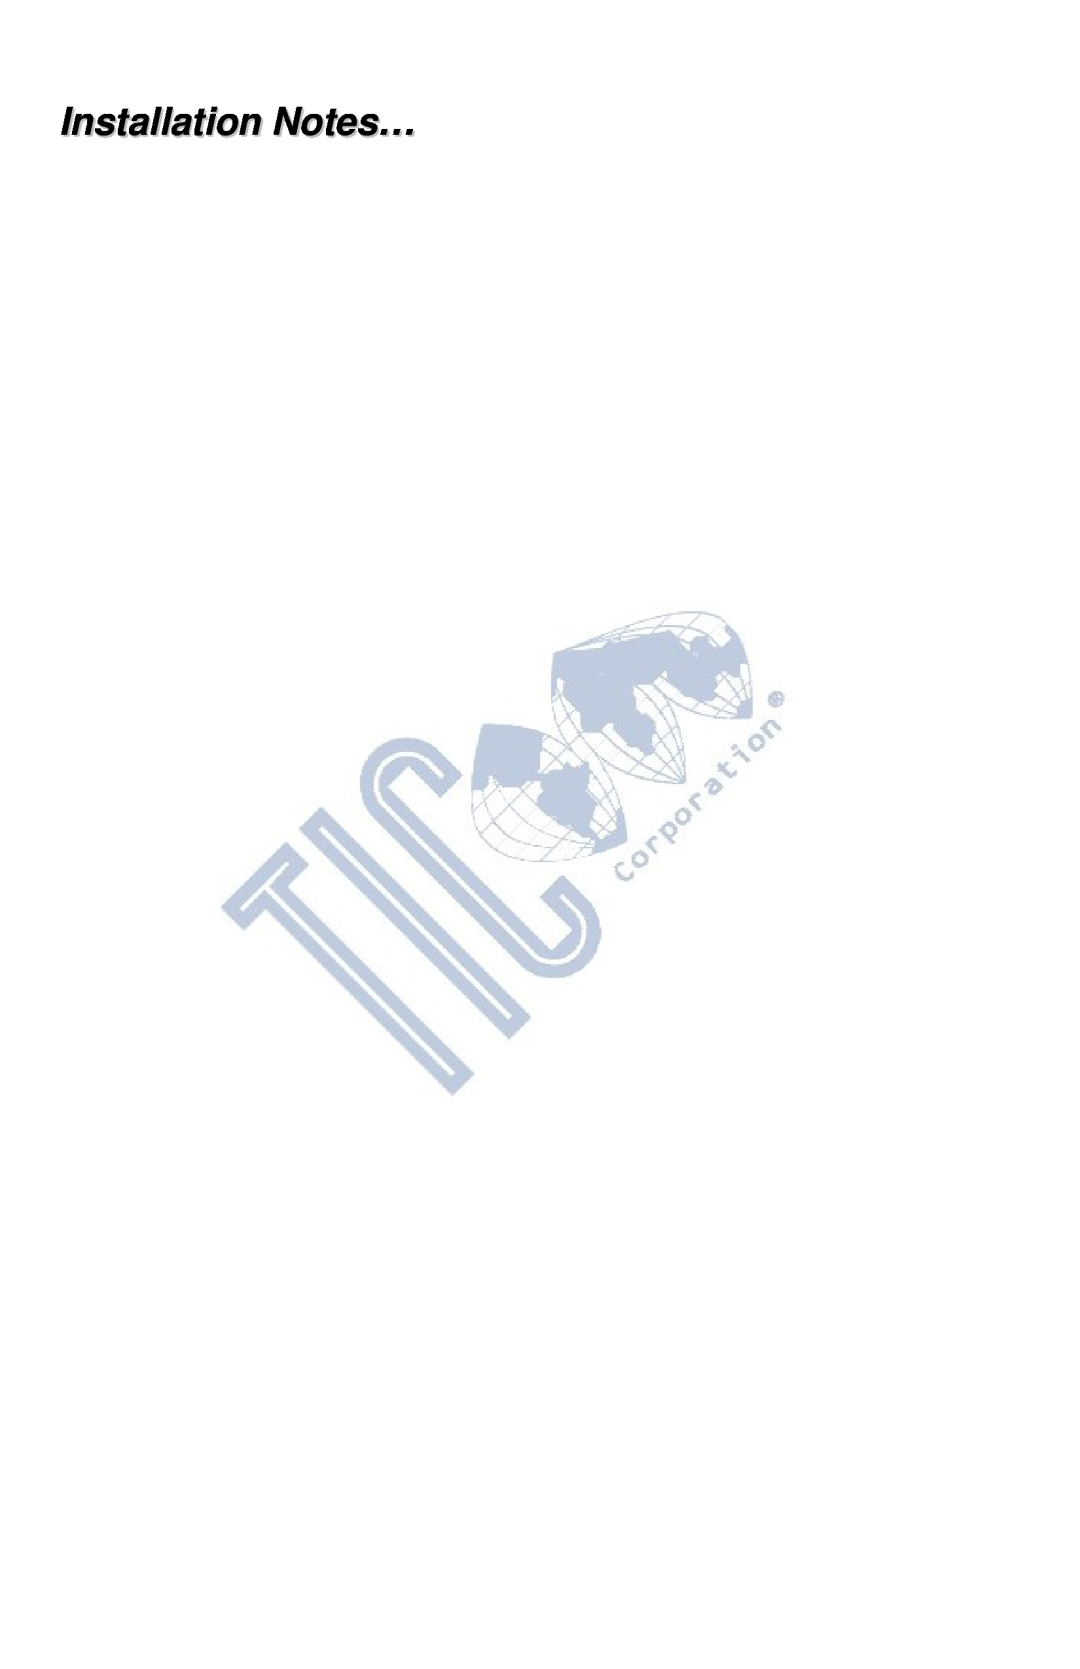 TIC TFS5, TFS0 manual Installation Notes… 